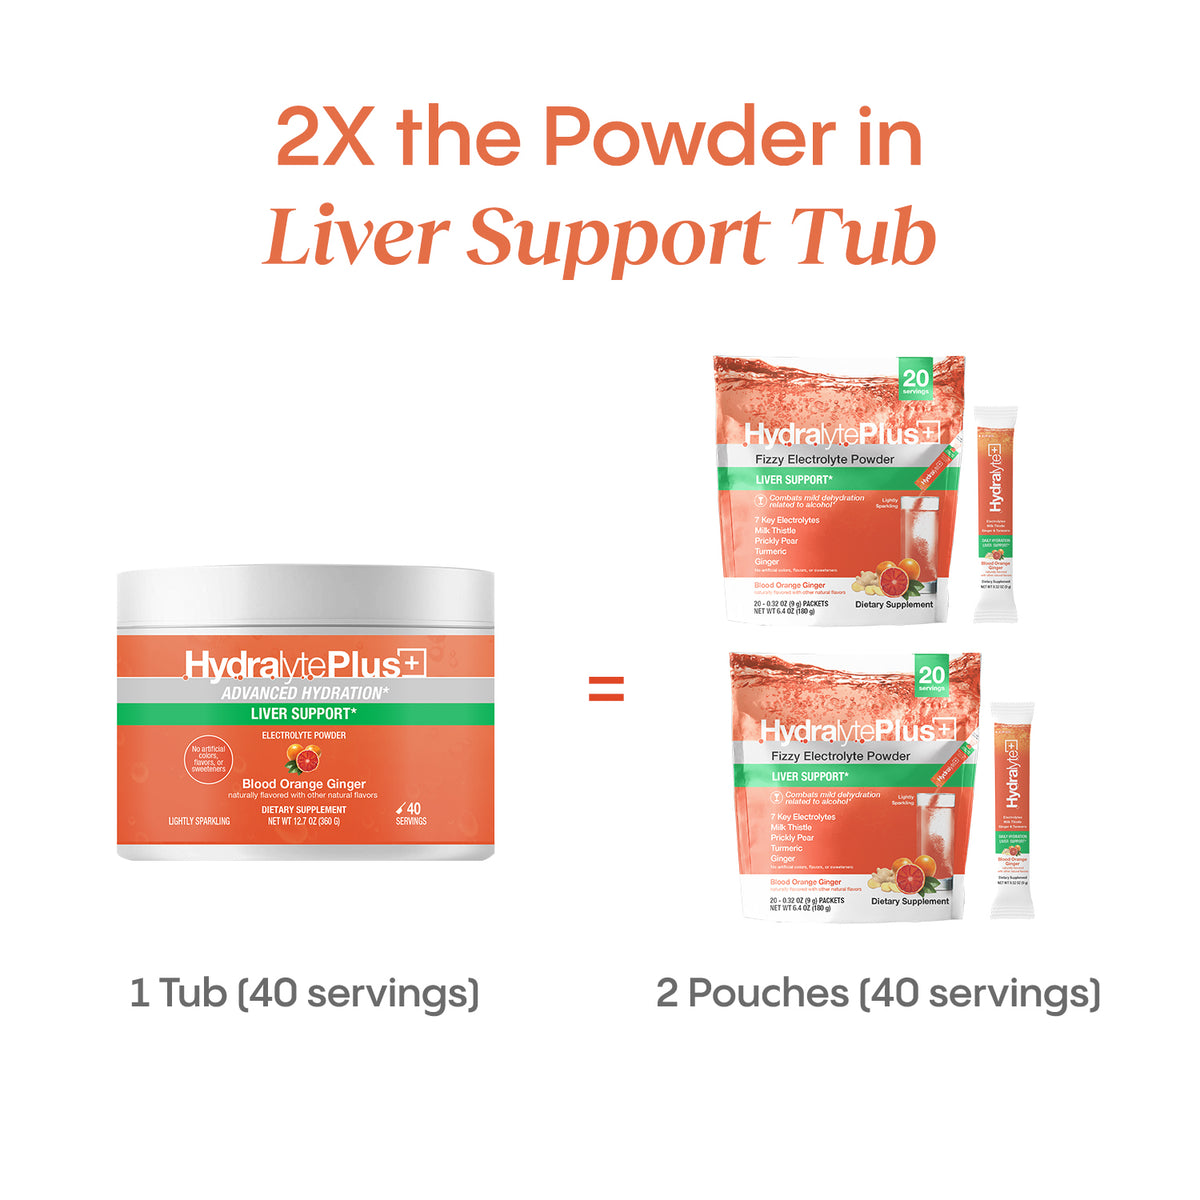 Plus Liver Support - Lightly Sparkling Tub